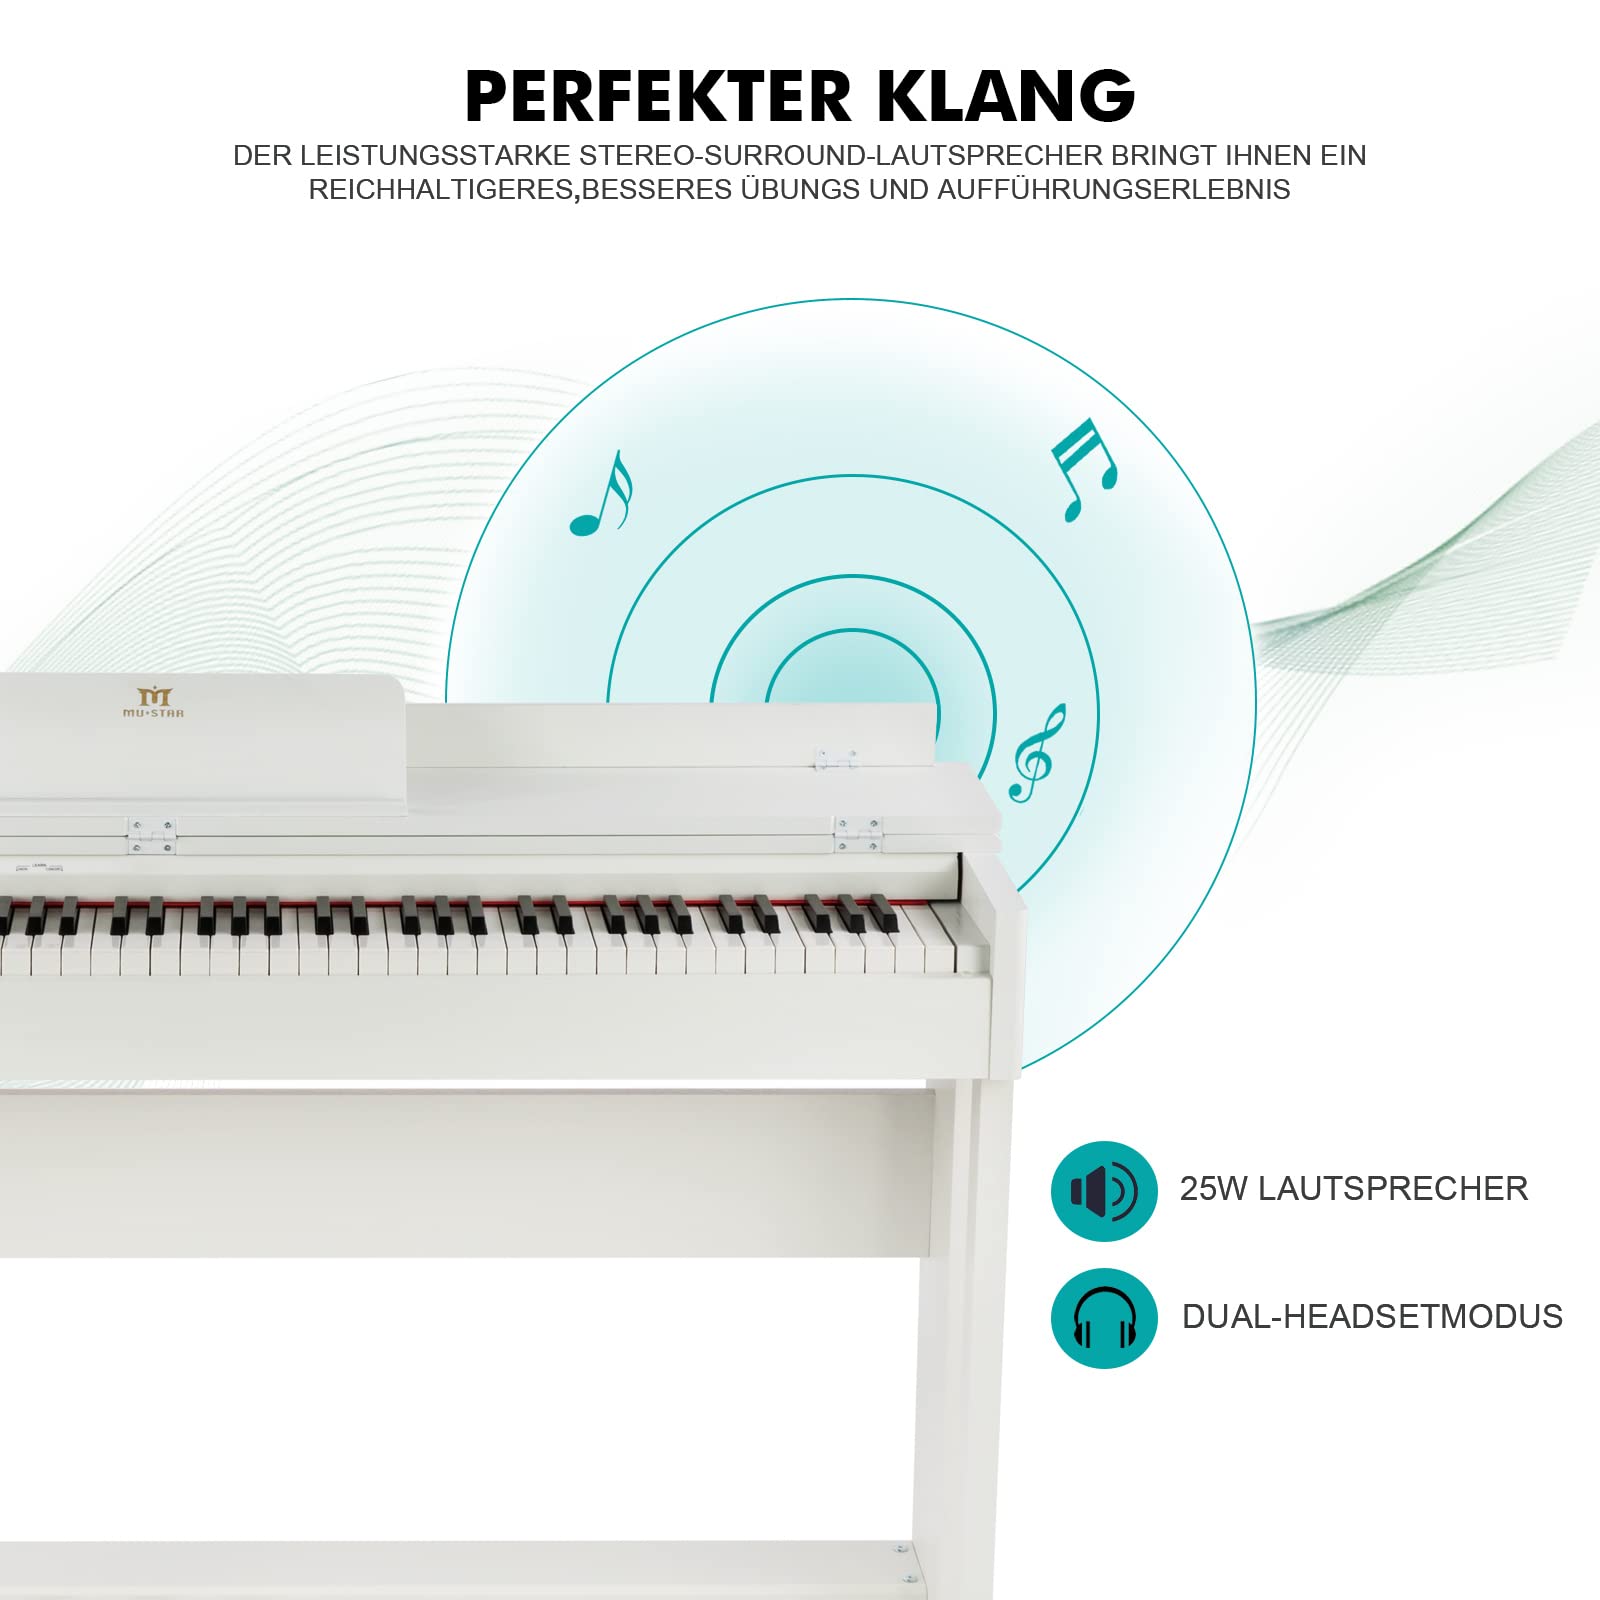 MUSTAR Digital Piano 88 Tasten mit Hammermechanik, E Piano weiß, E-Klavier mit 3 Pedale Adapter, 2 Kopfhöreranschluss, Duales Kontrollsystem, USB/MIDI, Klassisch professionell